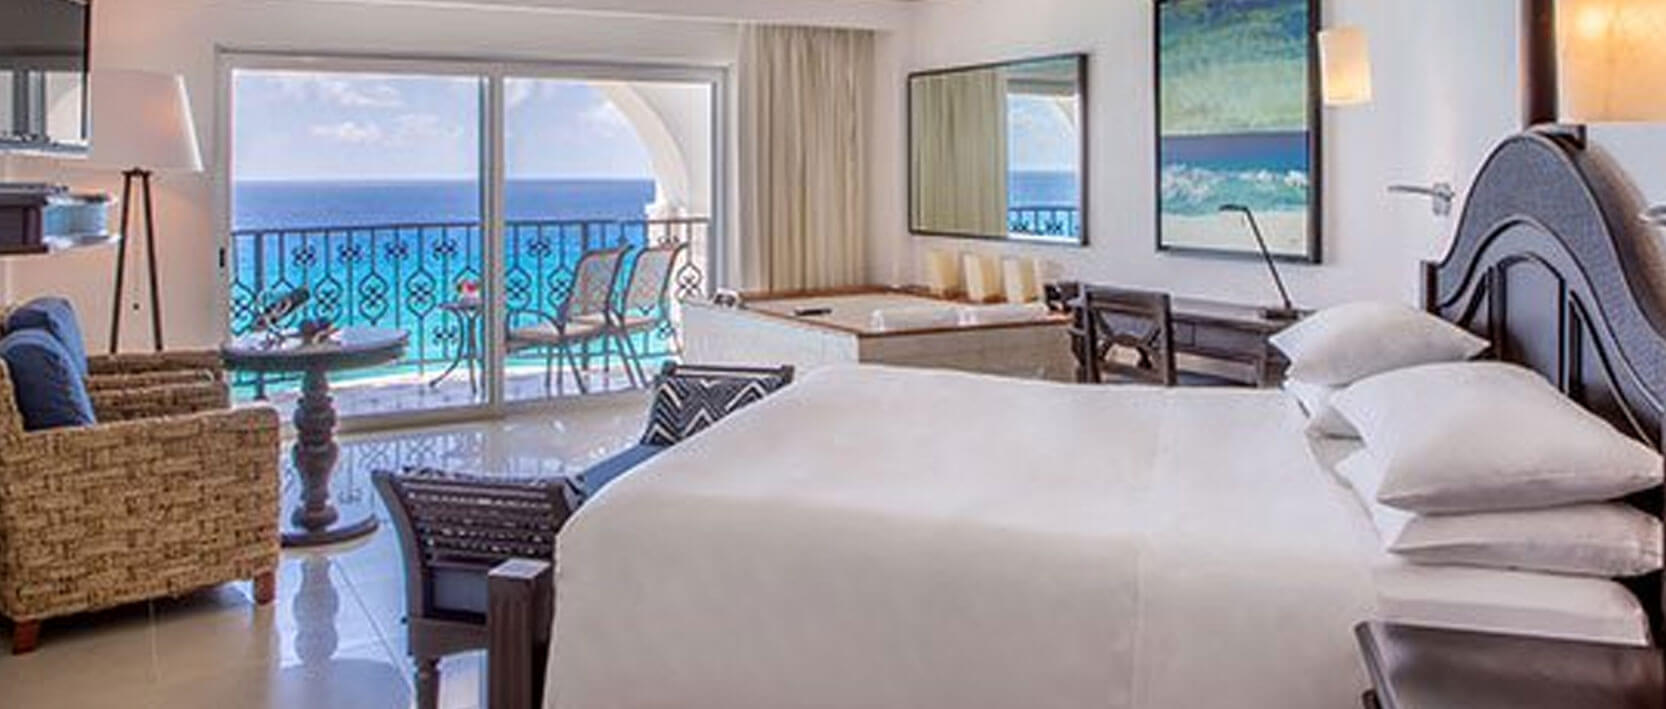 Hyatt Zilara Cancun Accommodations - Presidential Suite